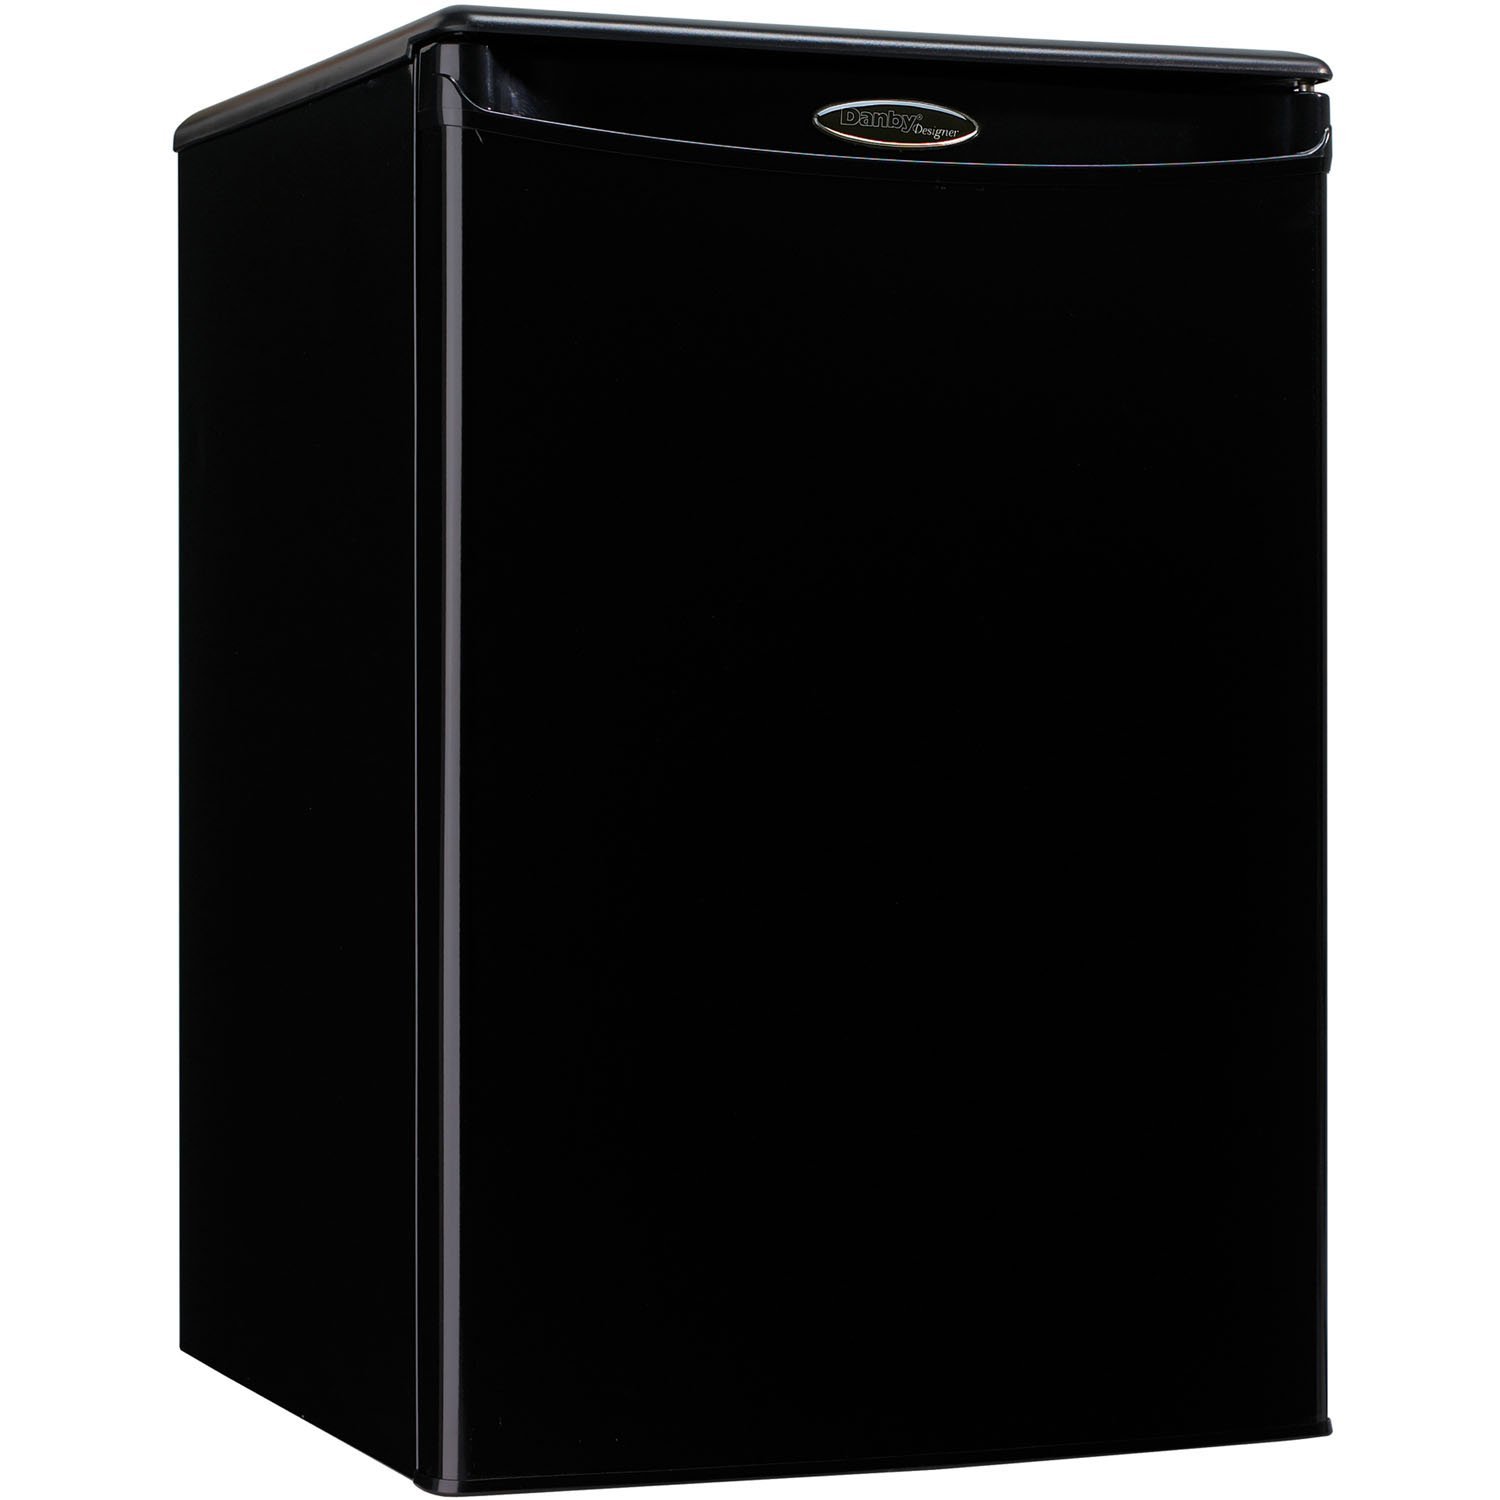 Danby DAR026A1BDD-3 Designer Compact All Refrigerator, 2.6-Cubic Feet, Black